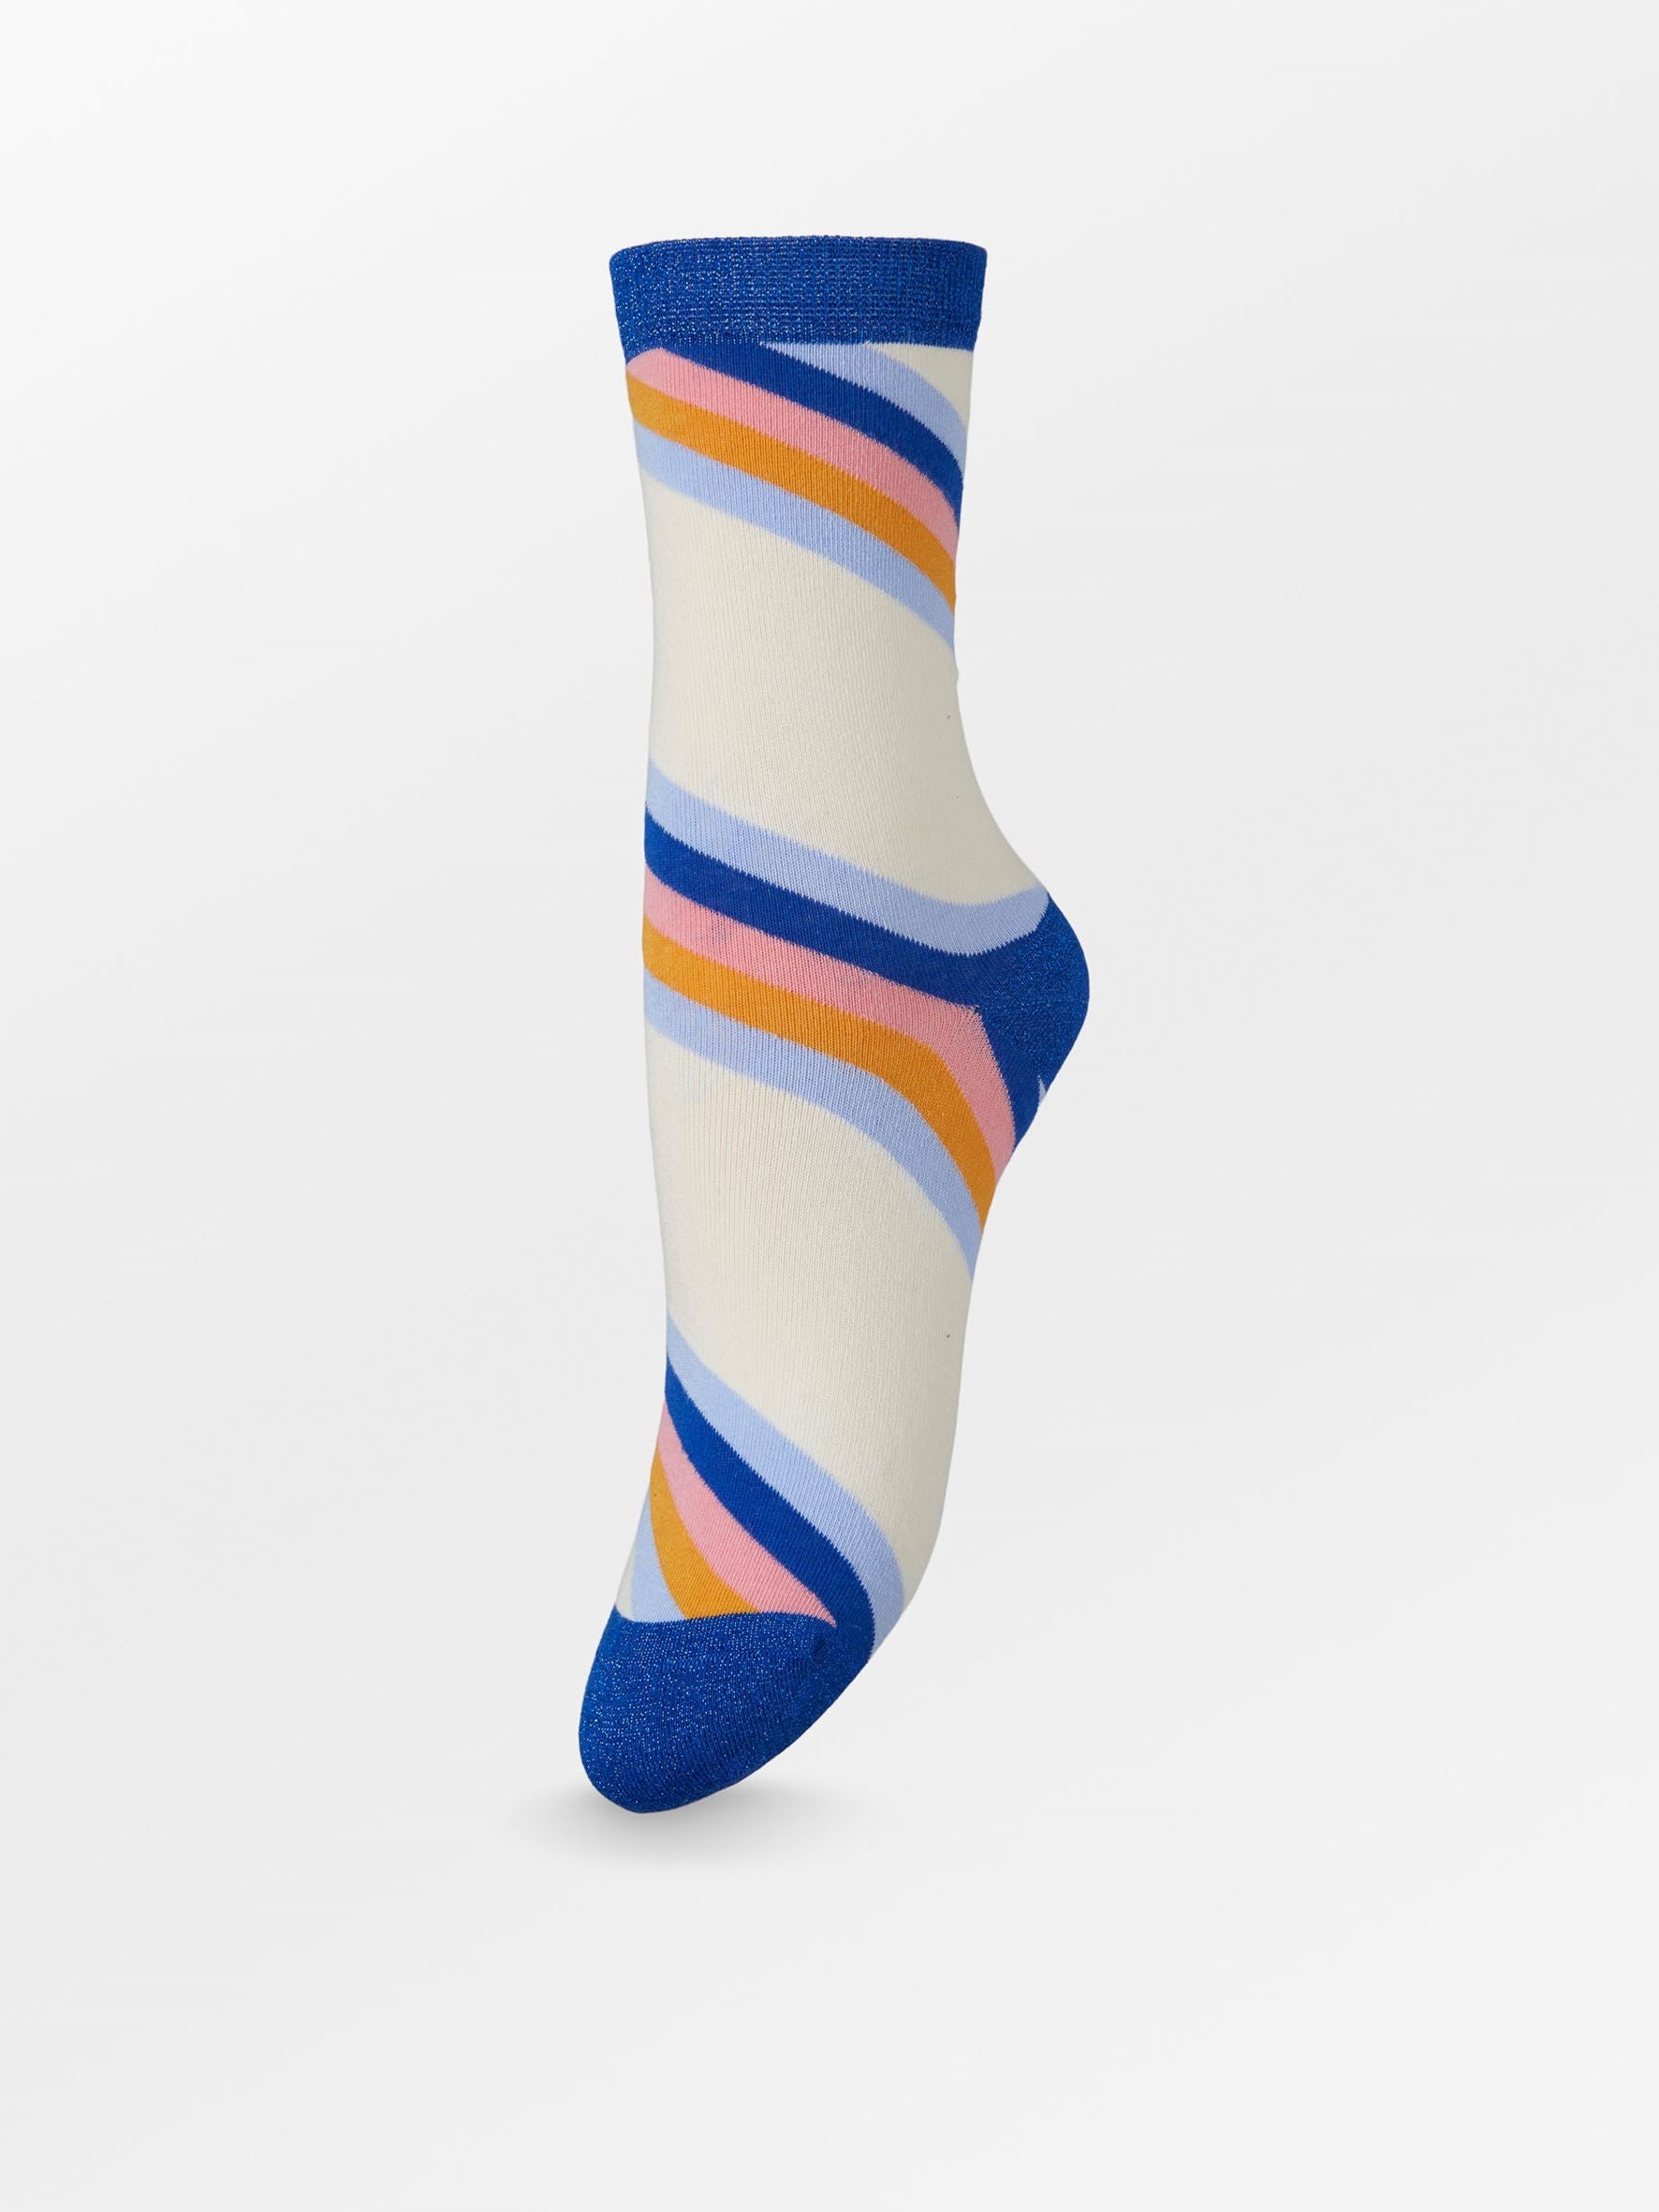 Becksöndergaard, Oblique Striped sock - Blue Surf, archive, archive, sale, sale